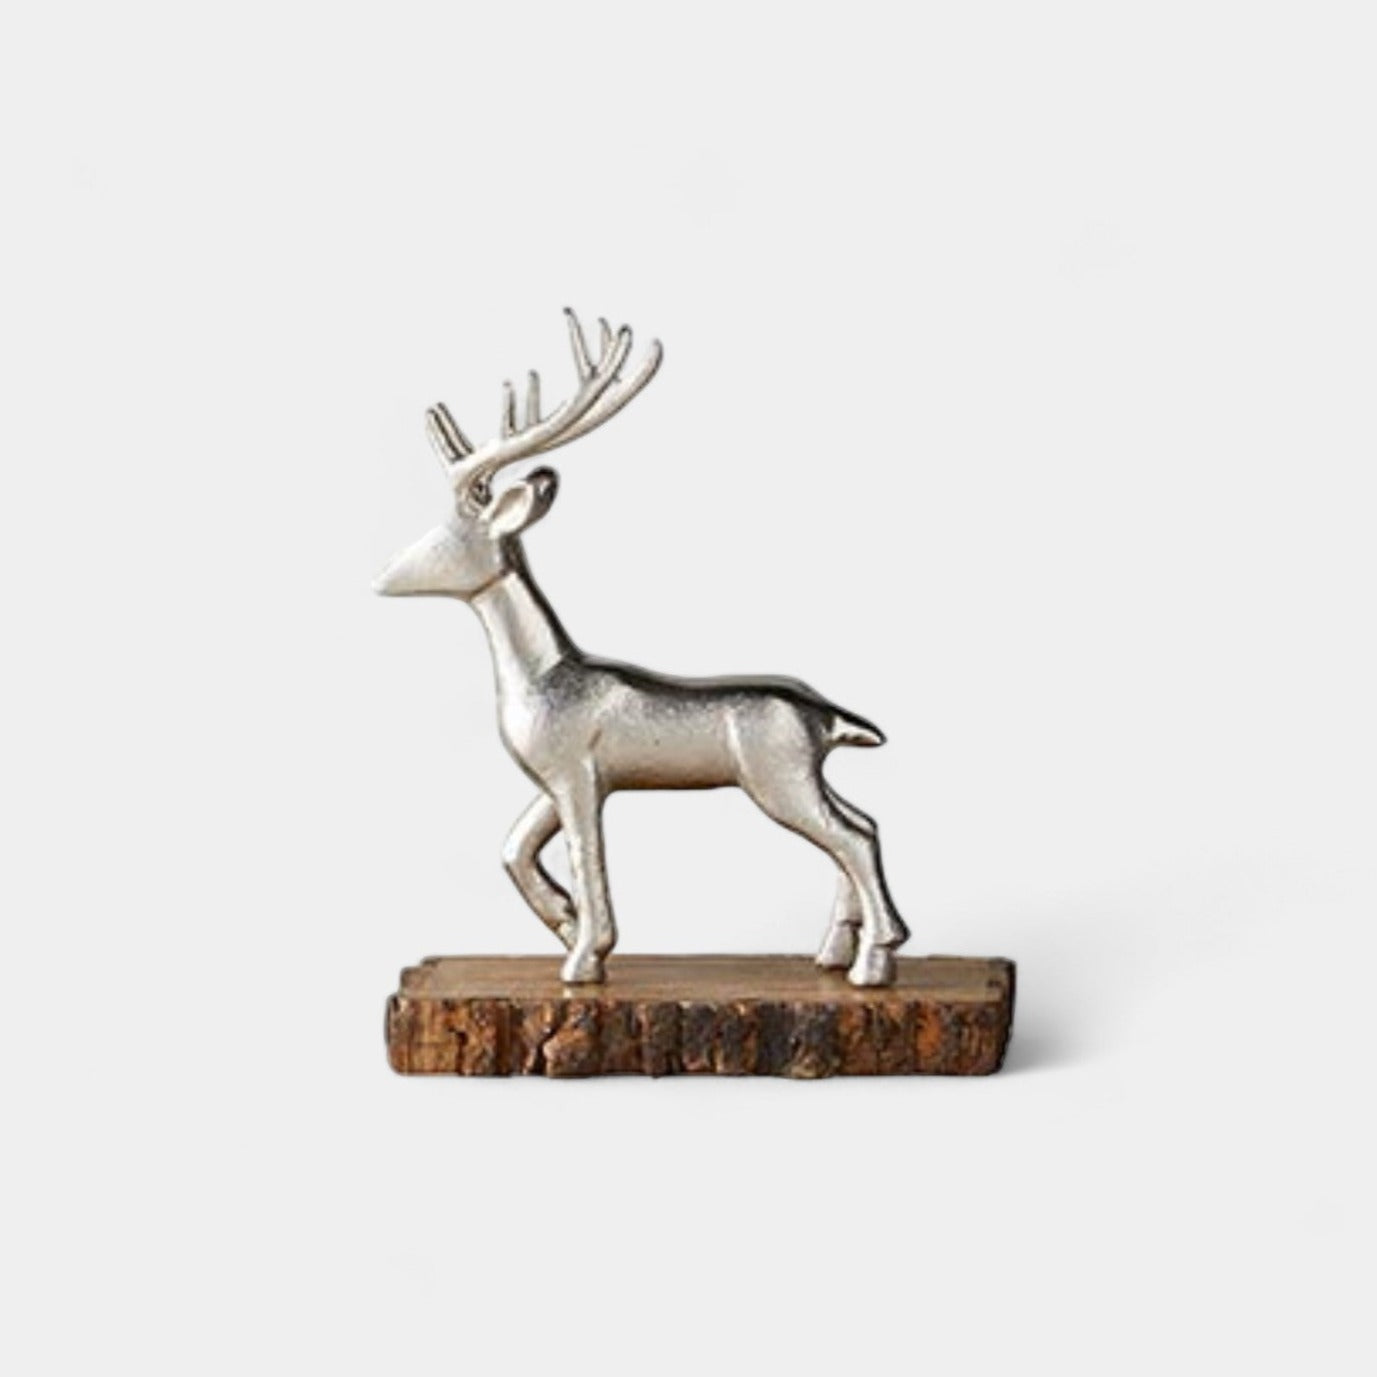 Glistening Metal Reindeer on Wood Stand